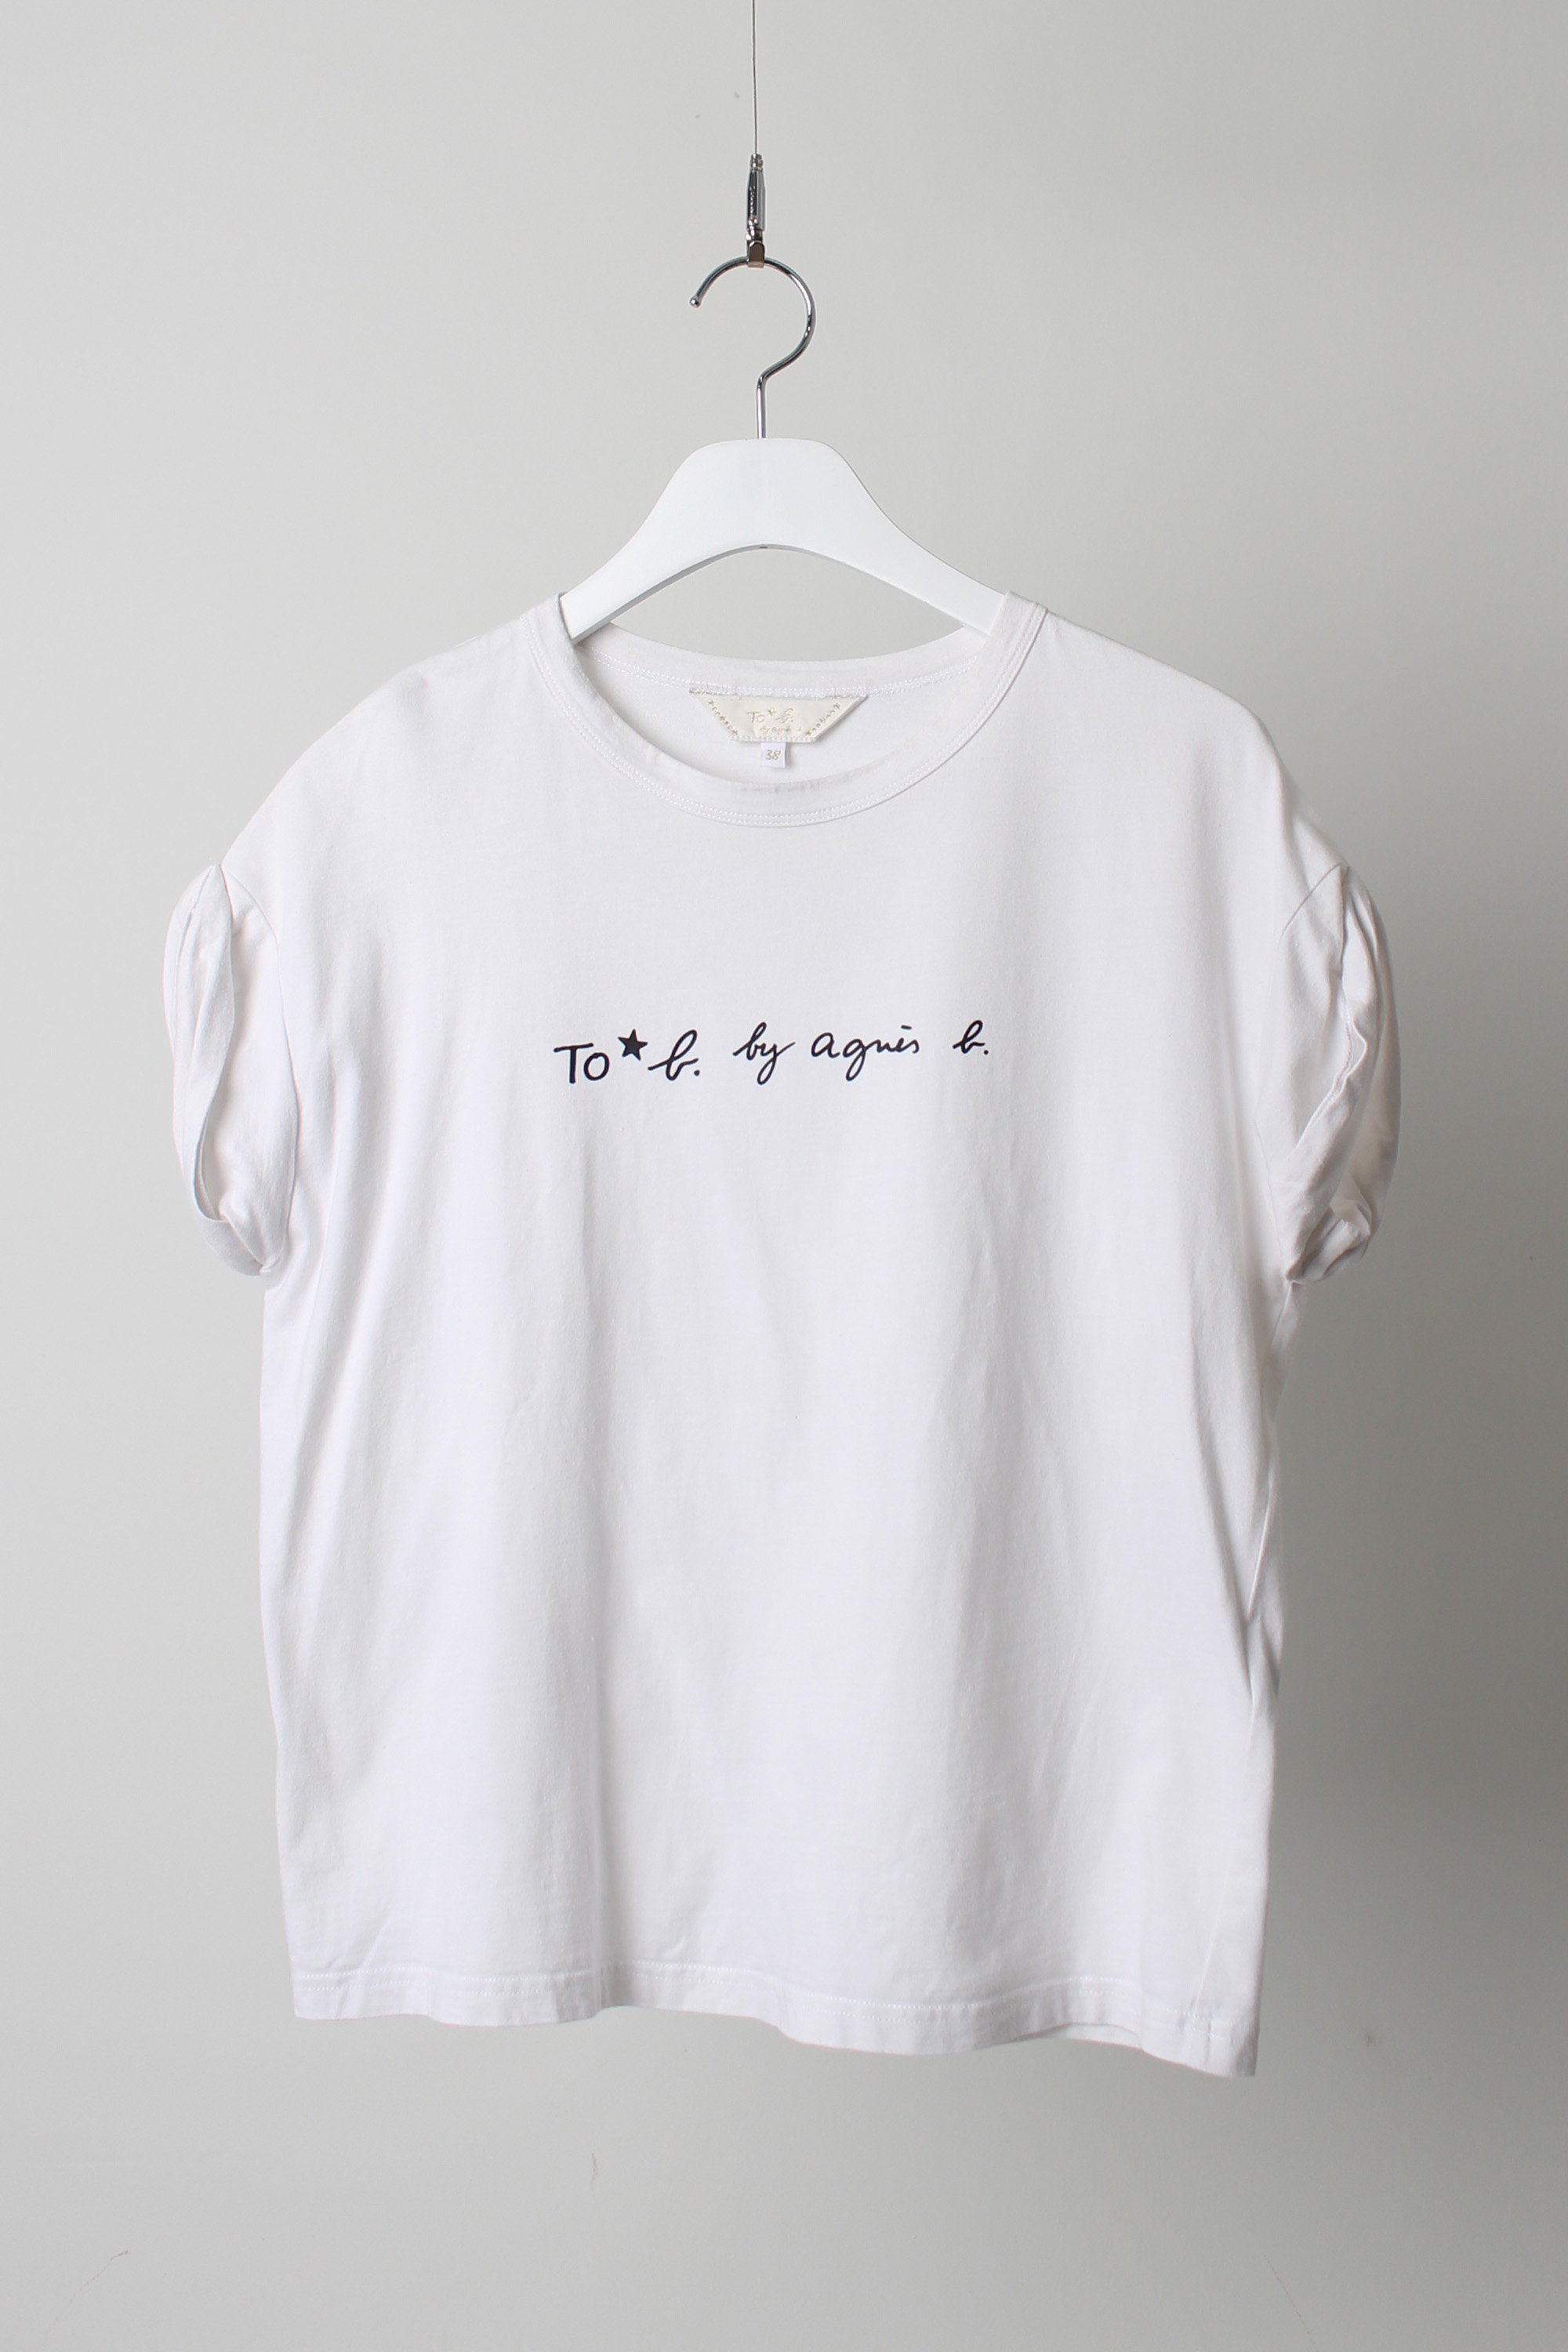 Agnes b T-shirt